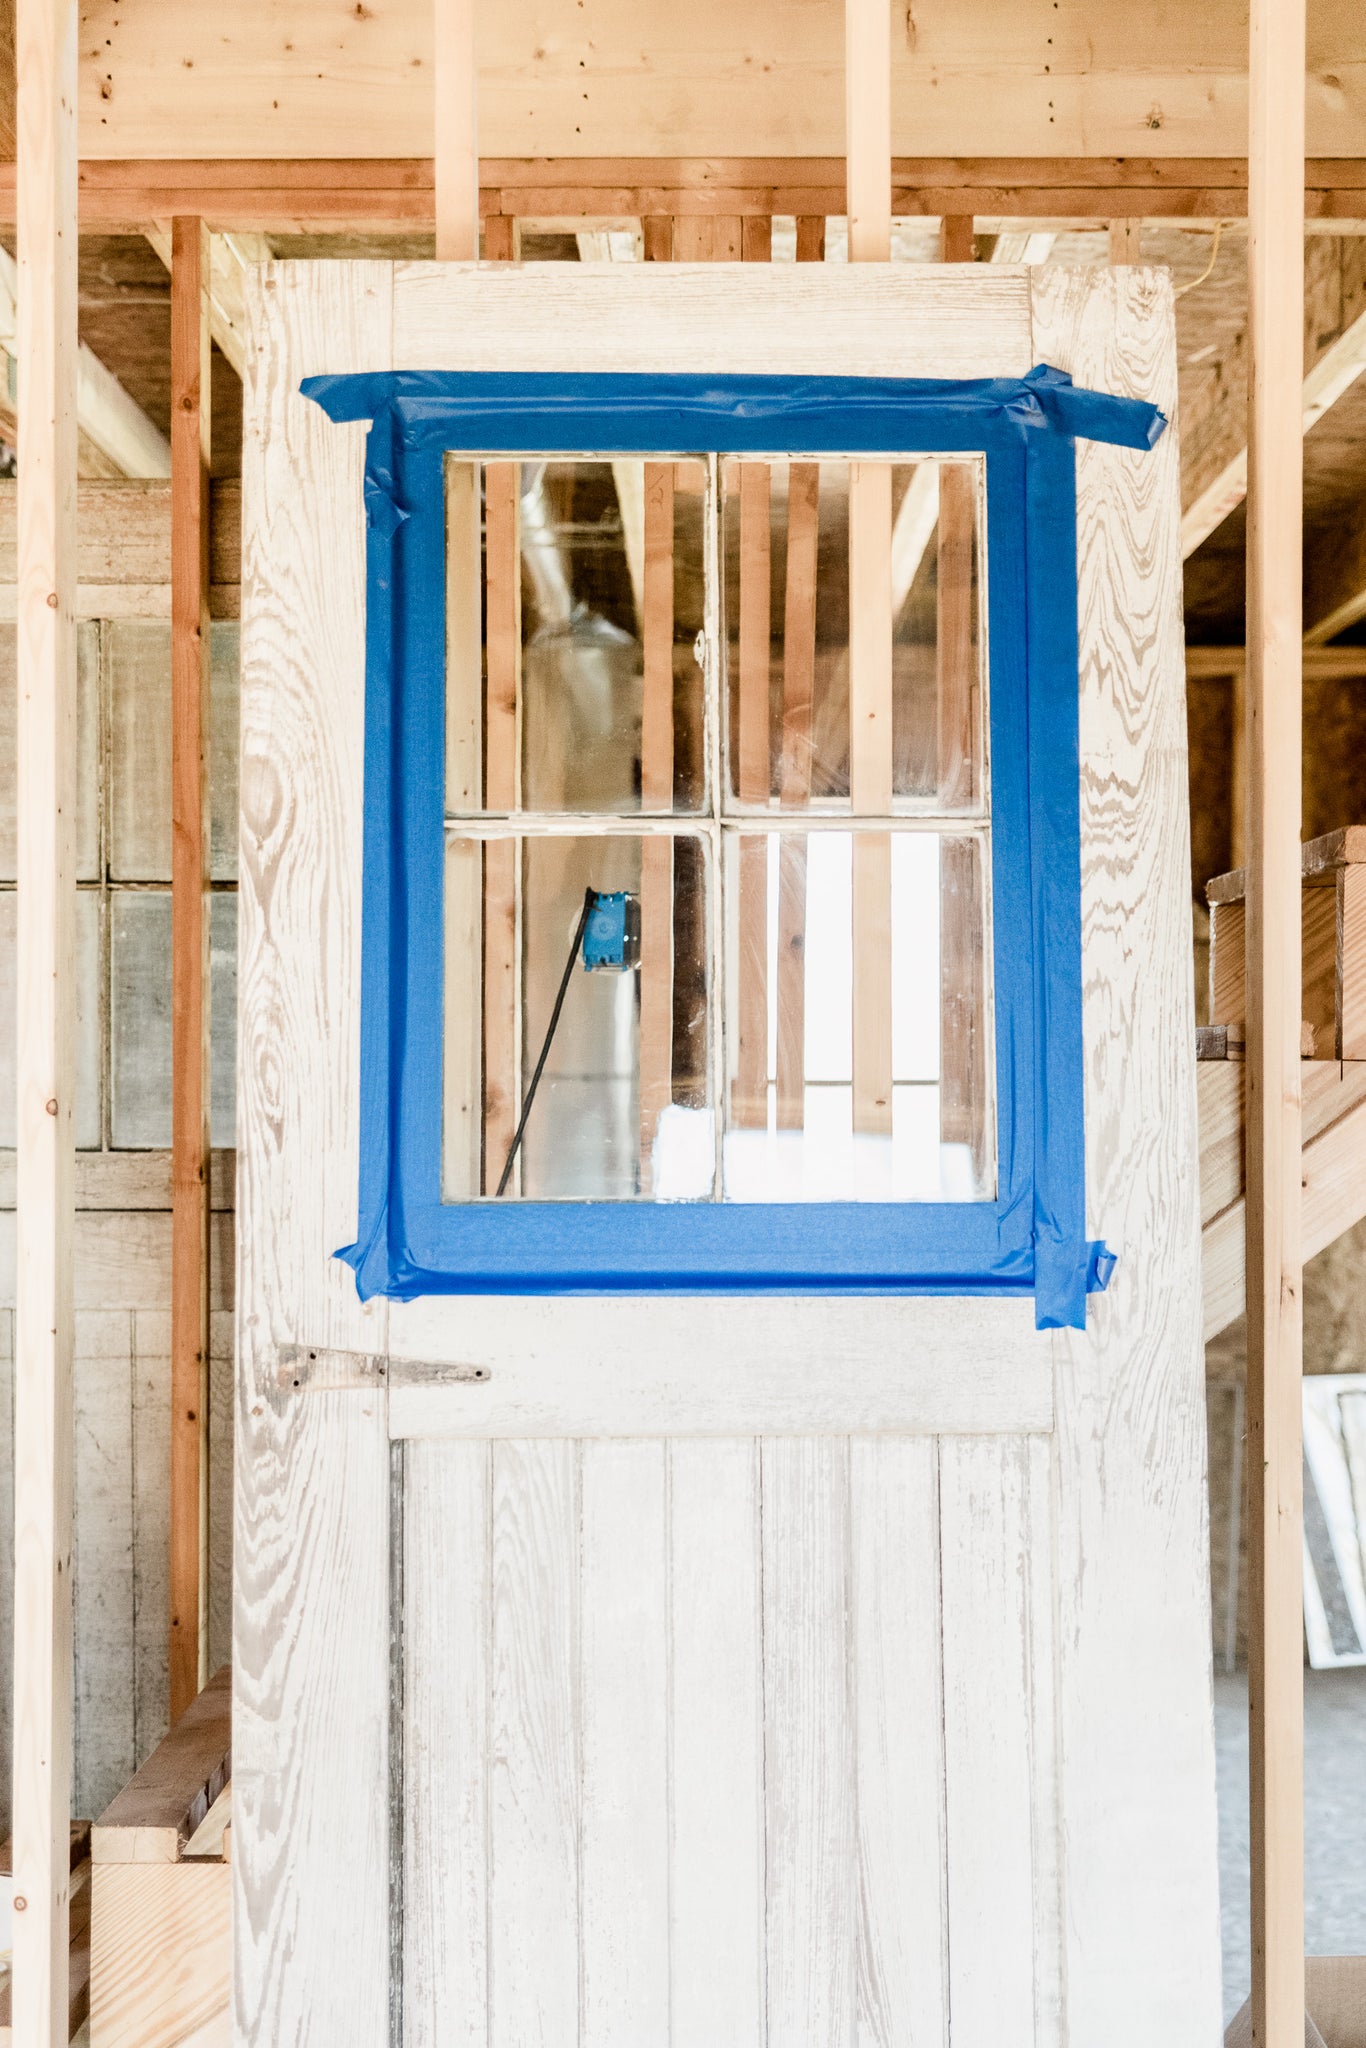 DIY Frosted Glass Windows – Cottonwood Shanty